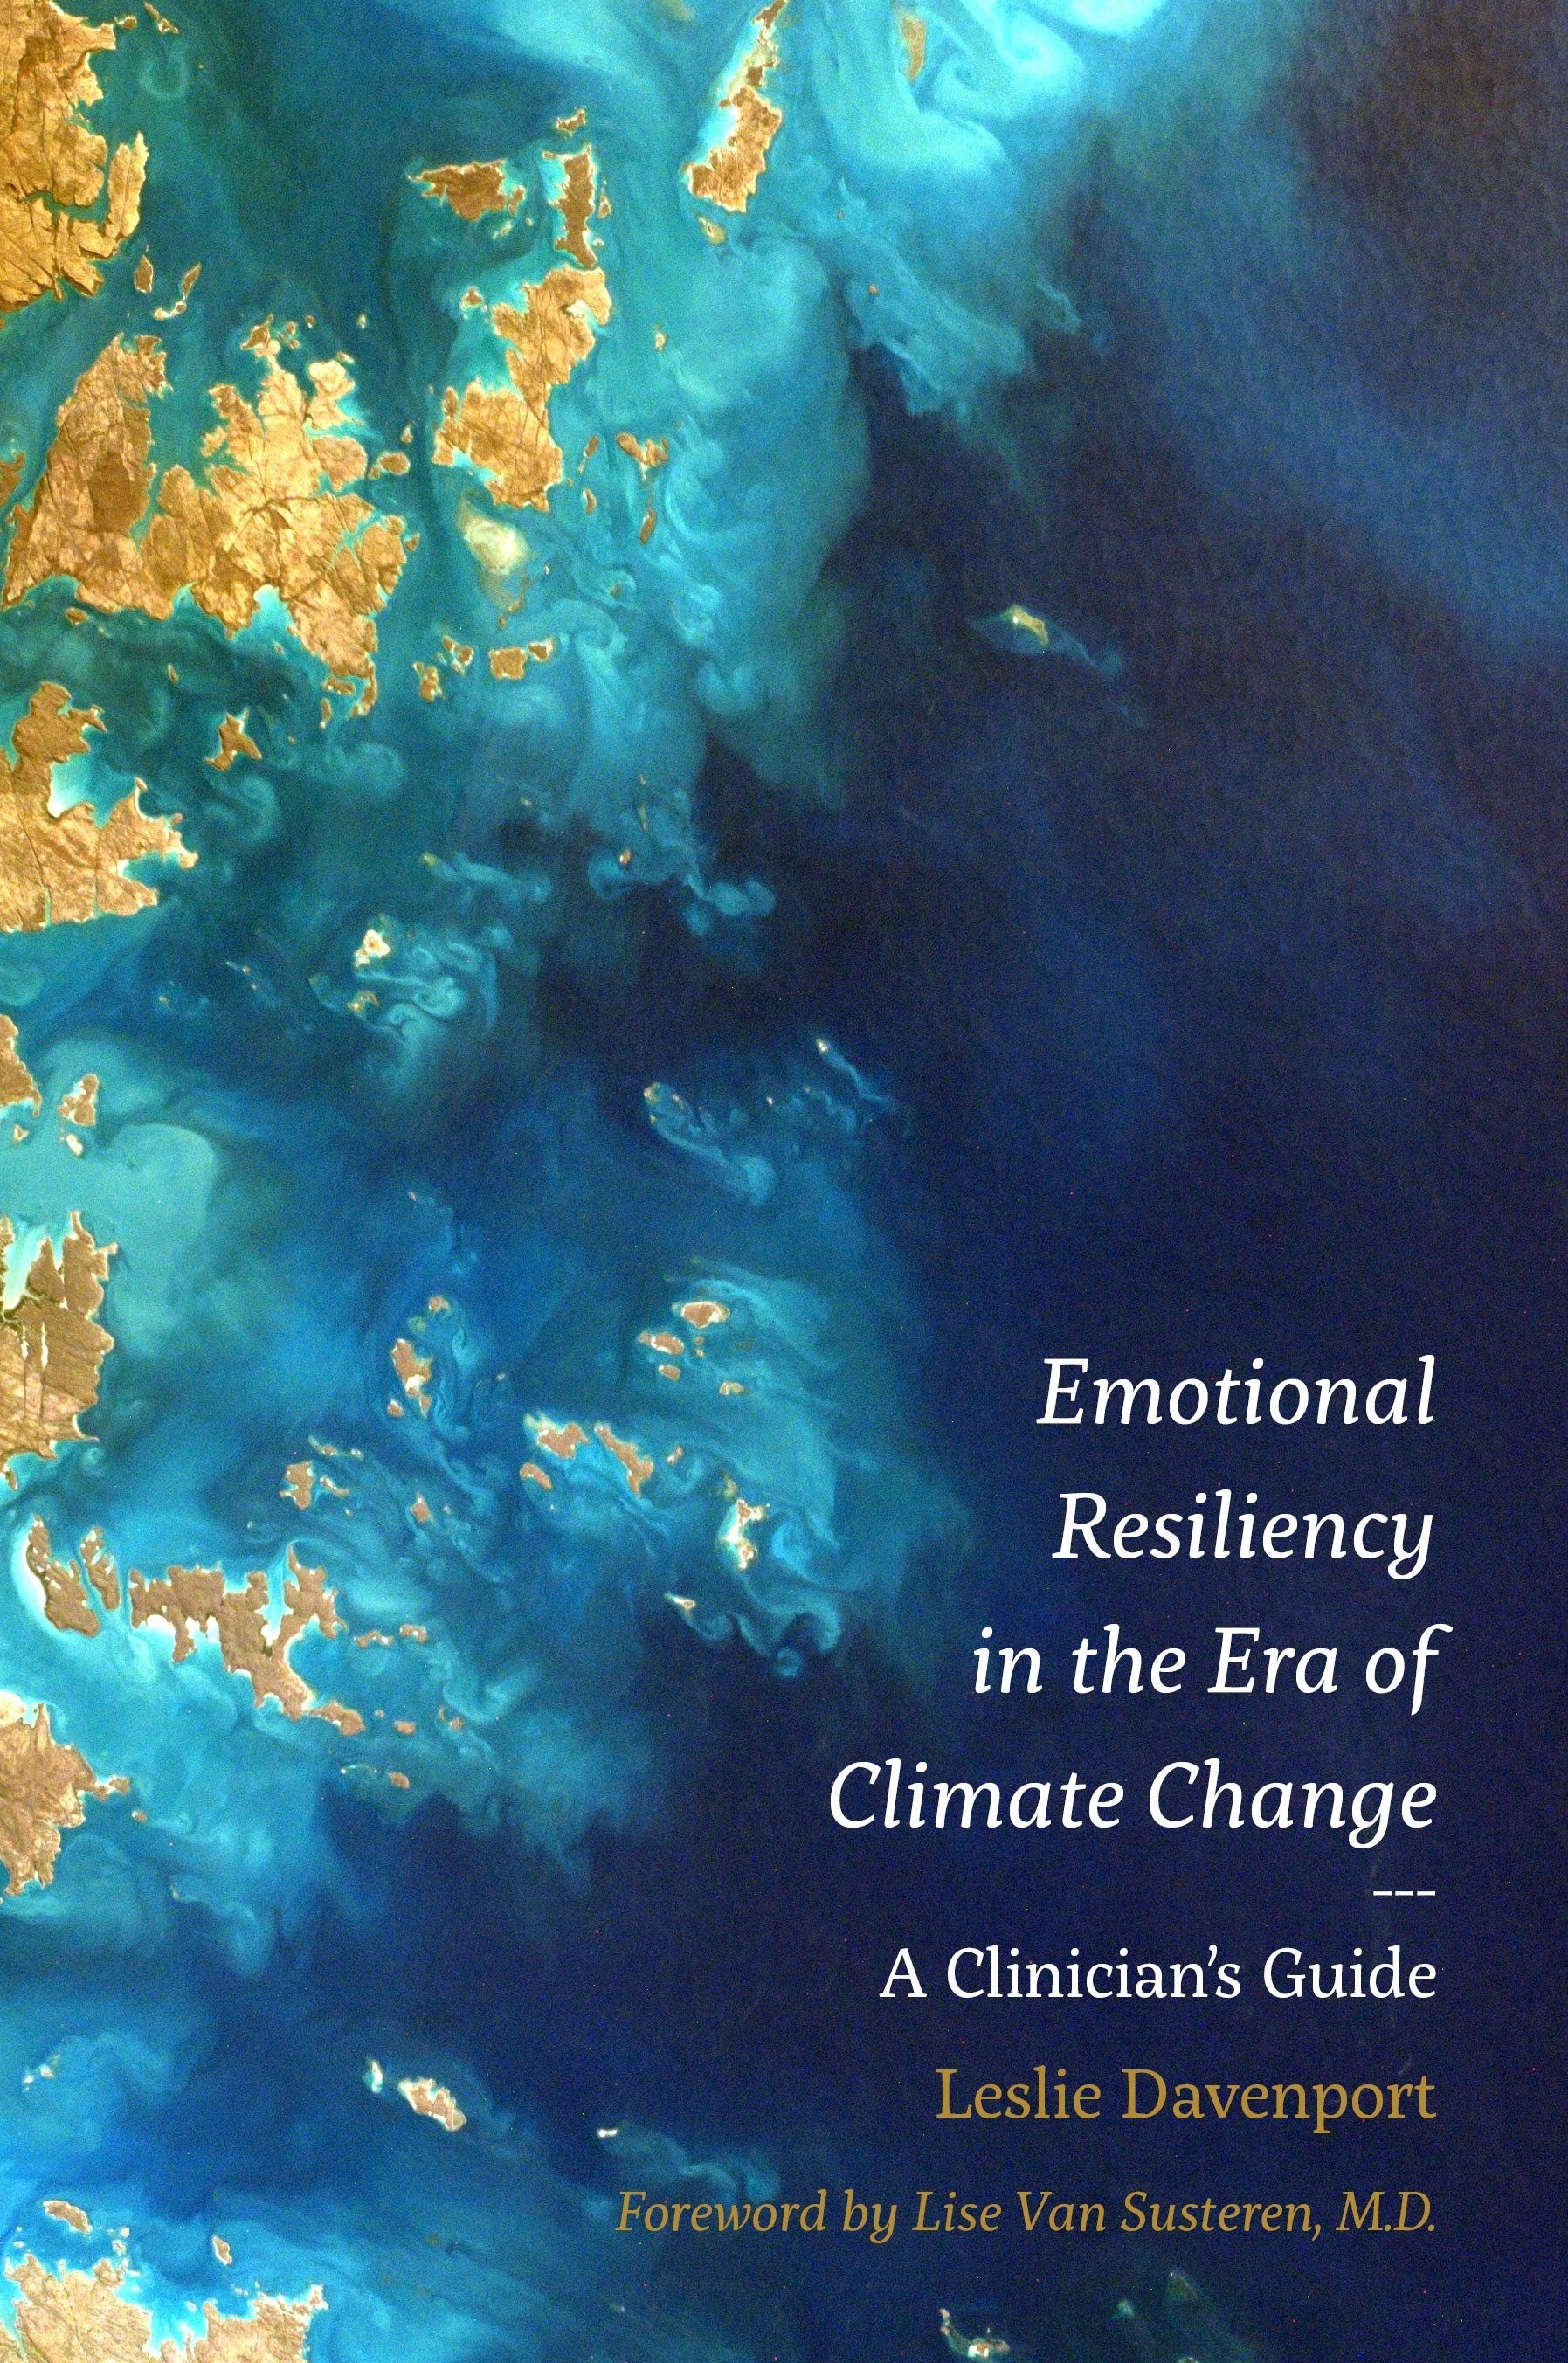 Emotional Resiliency in the Era of Climate Change by Lise Van Susteren, M.D., Leslie Davenport